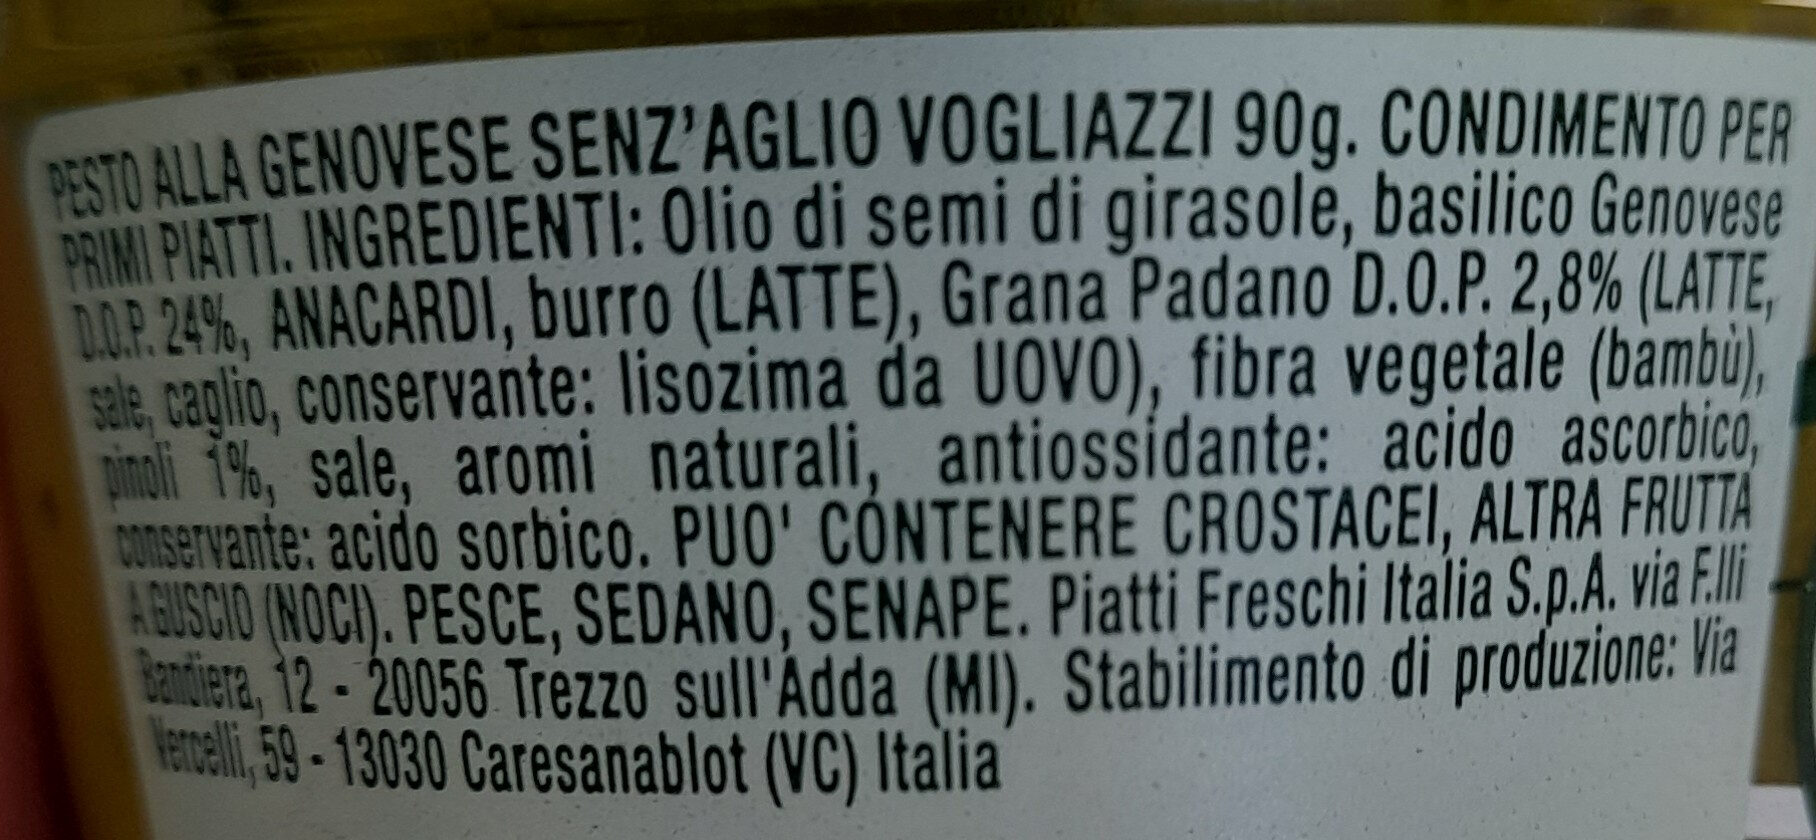 Pesto senza aglio - Ingredienti